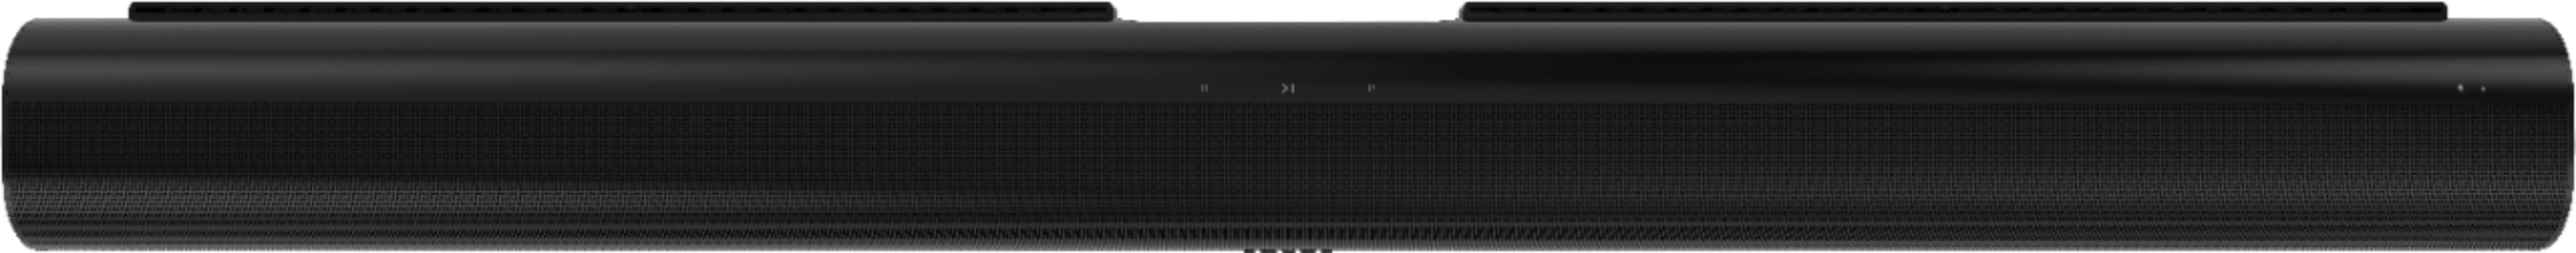 Sonos Arc Soundbar with Dolby Atmos, Google Assistant and Amazon 